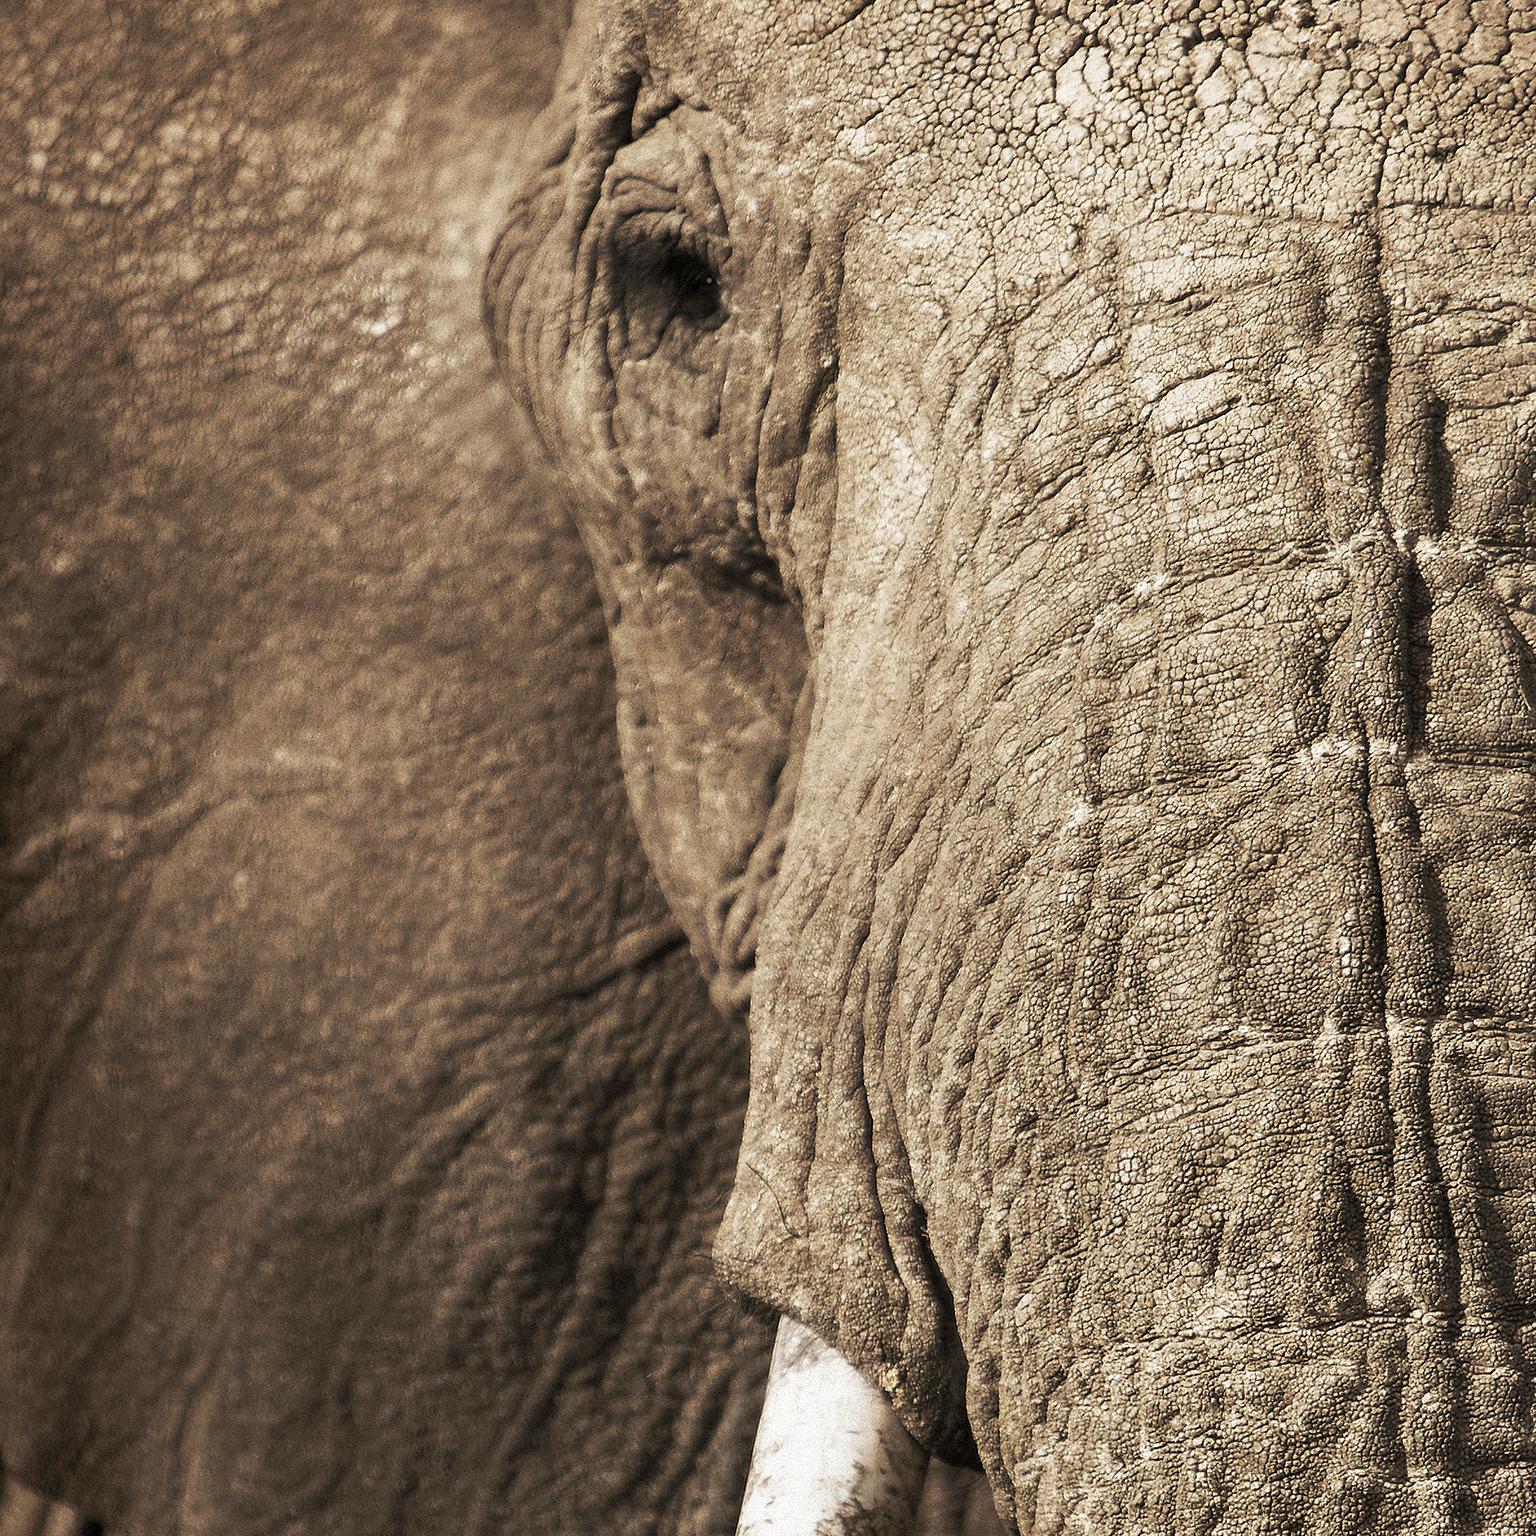 Elephant-04, Namibia. - Photograph by Chris Gordaneer